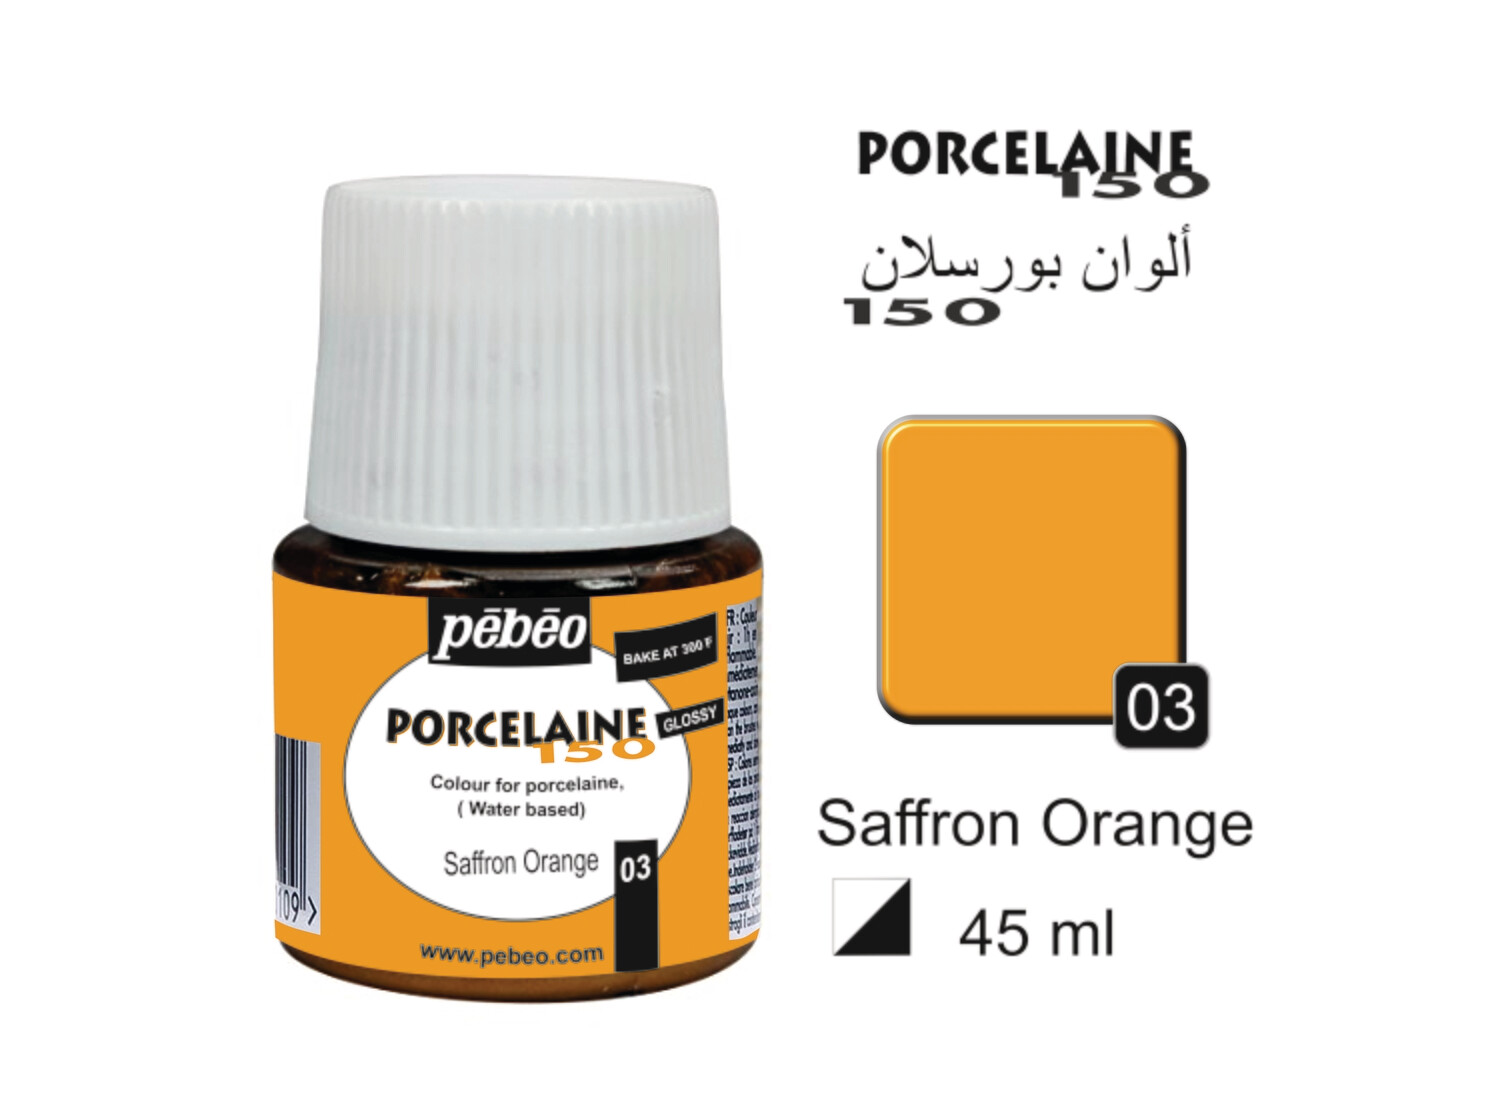 PORCELAINE 150, GLOSS 45 ml, Saffron orange No. 03